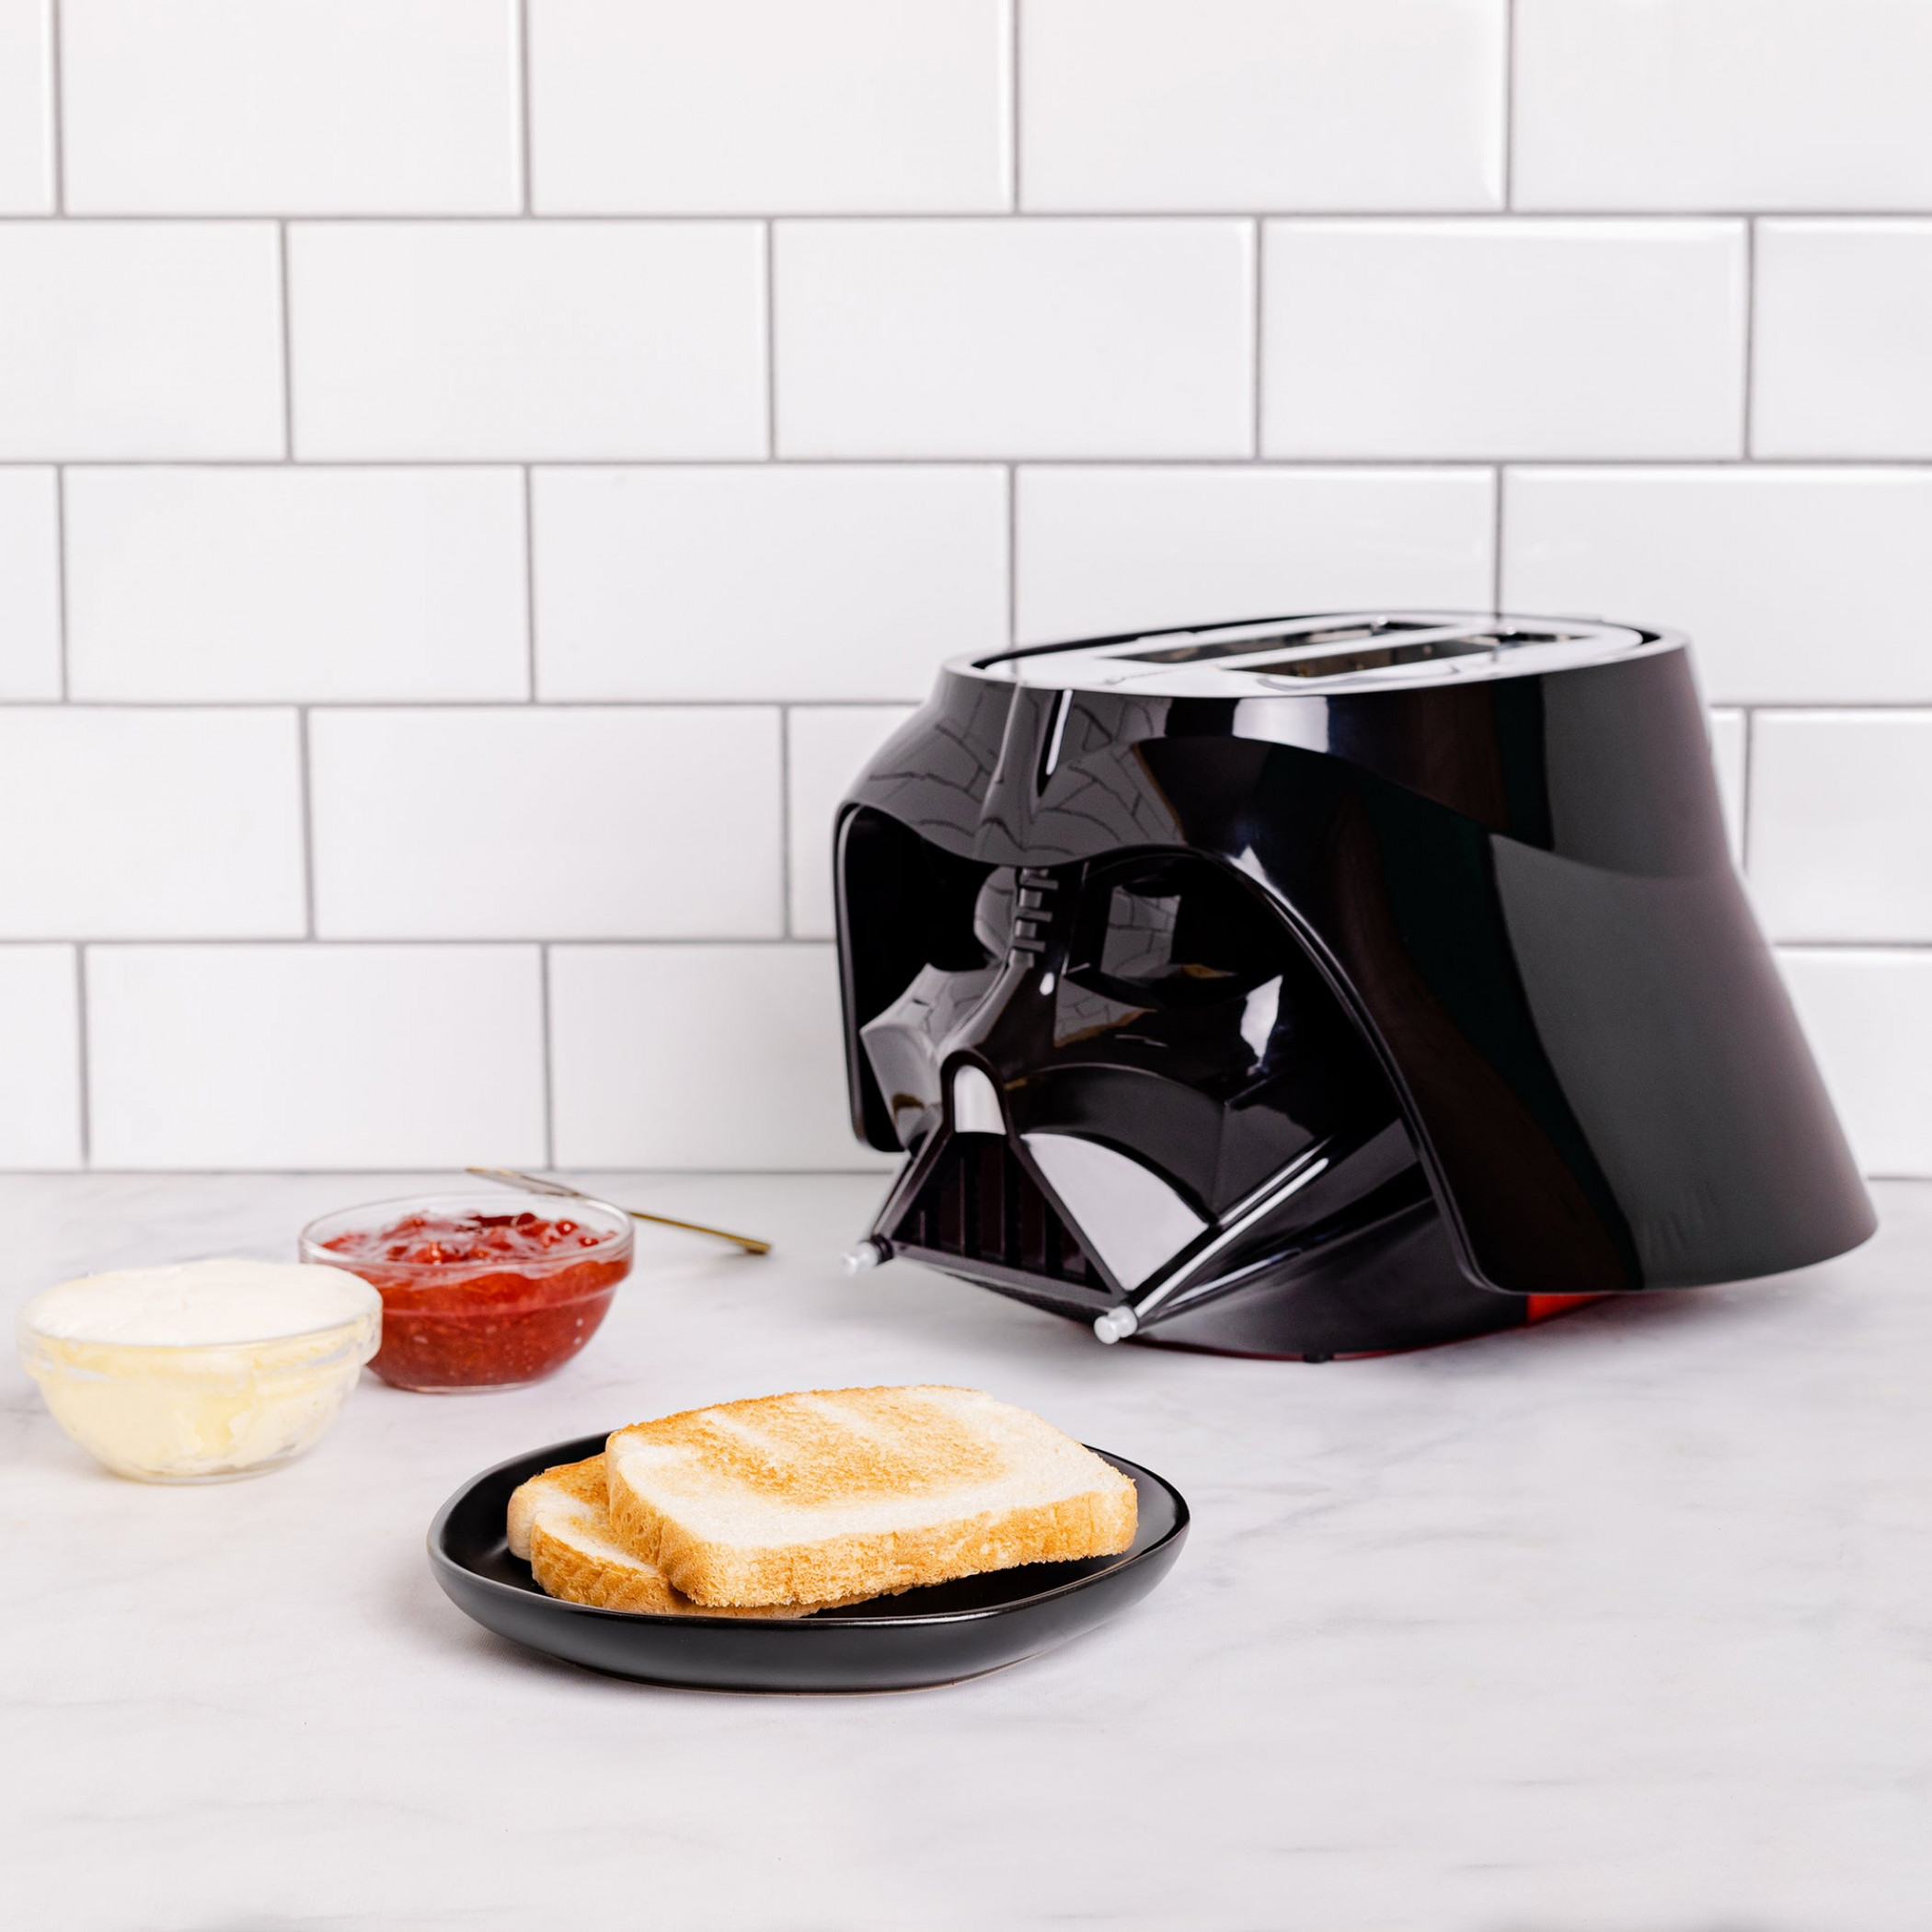 Disney Star Wars Darth Vader Toaster - Brand New in Box - Free Shipping!!!